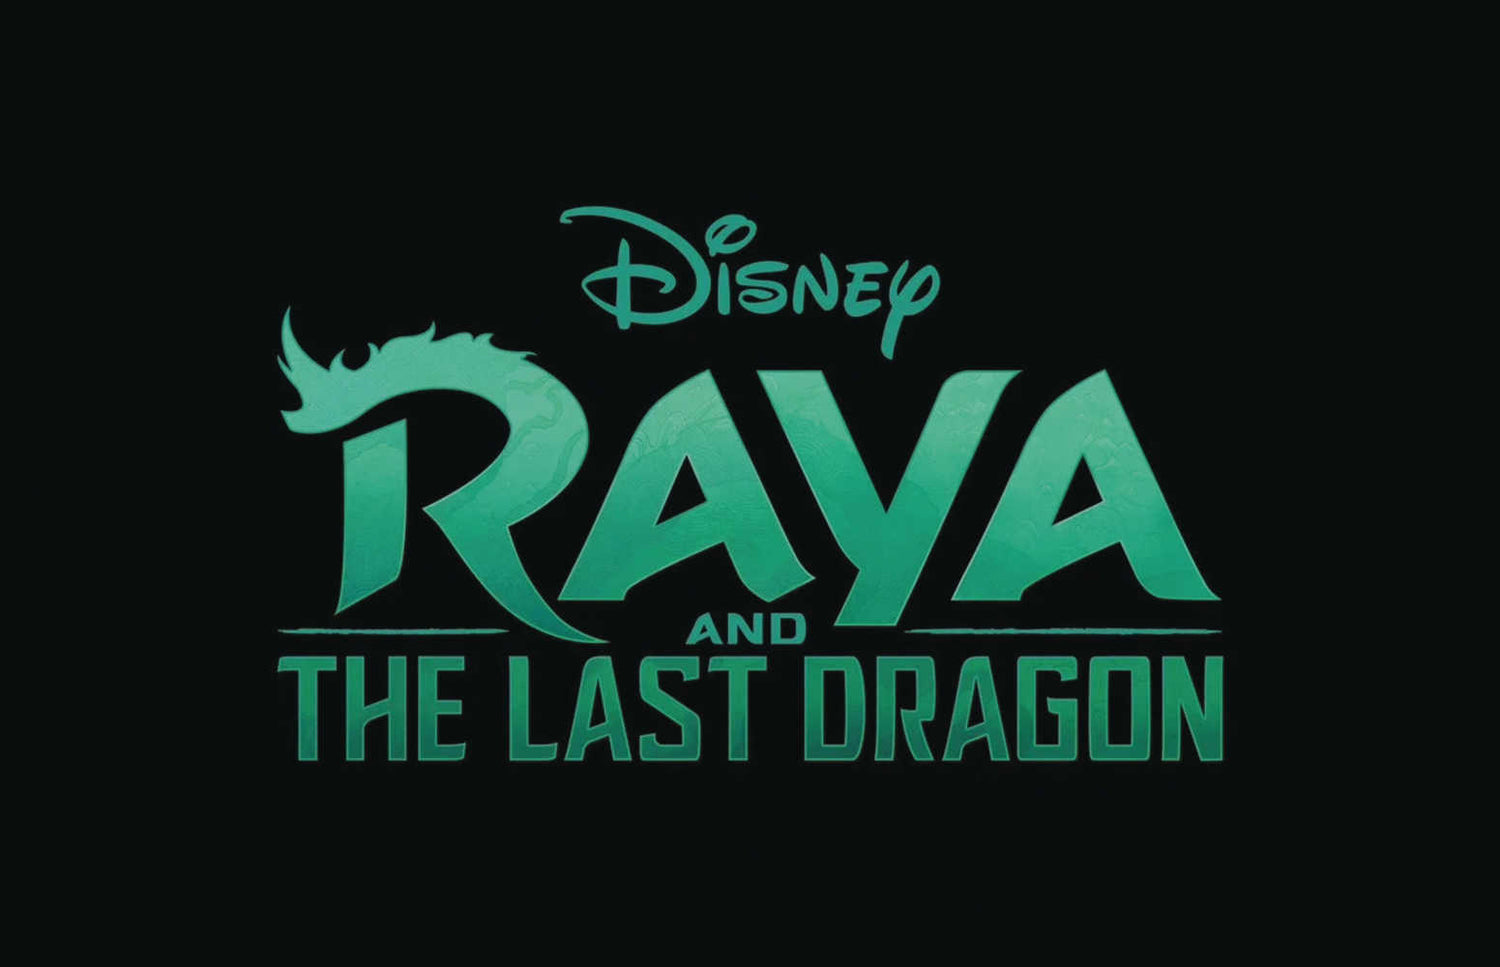 Disney Raya & Last Dragon Graphic Novel